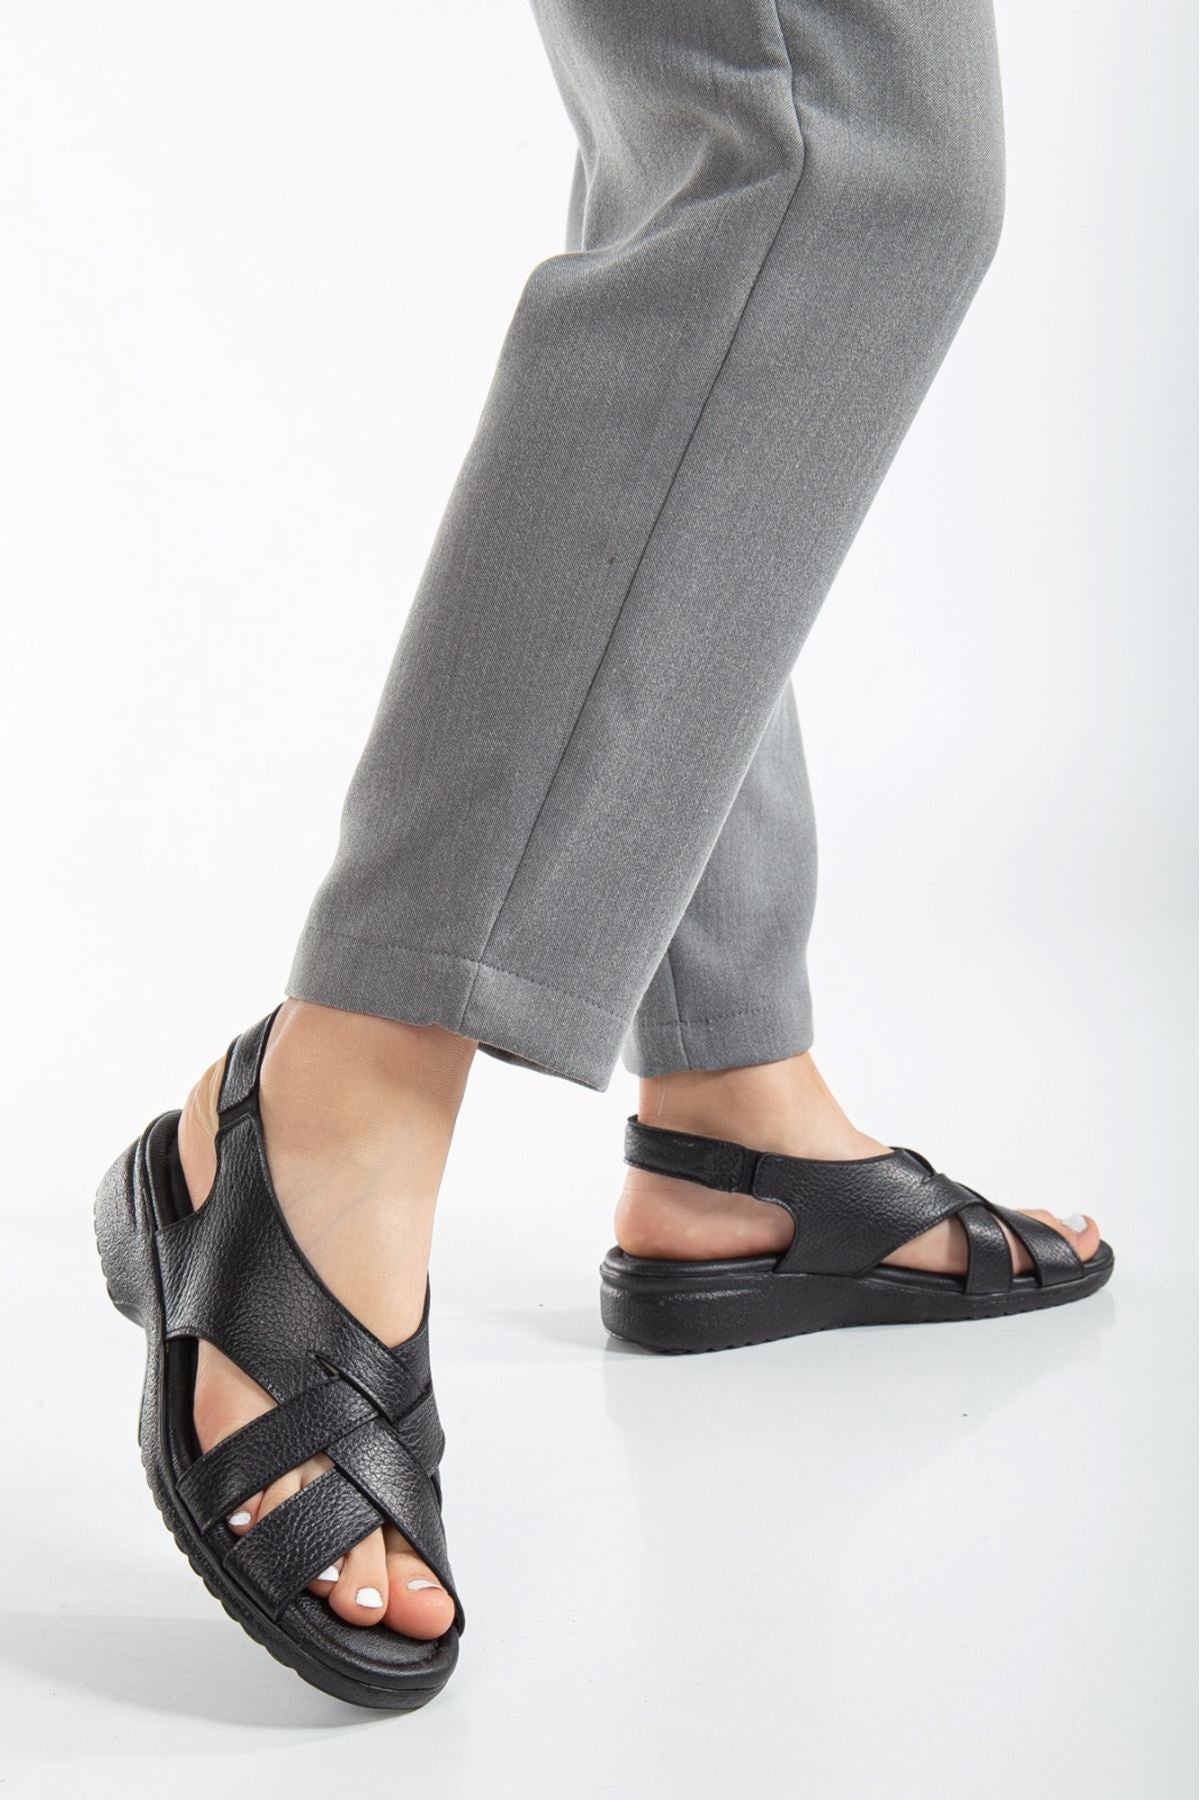 Women's Cross Genuine Leather Black Orthopedic Sole Sandals - STREETMODE ™